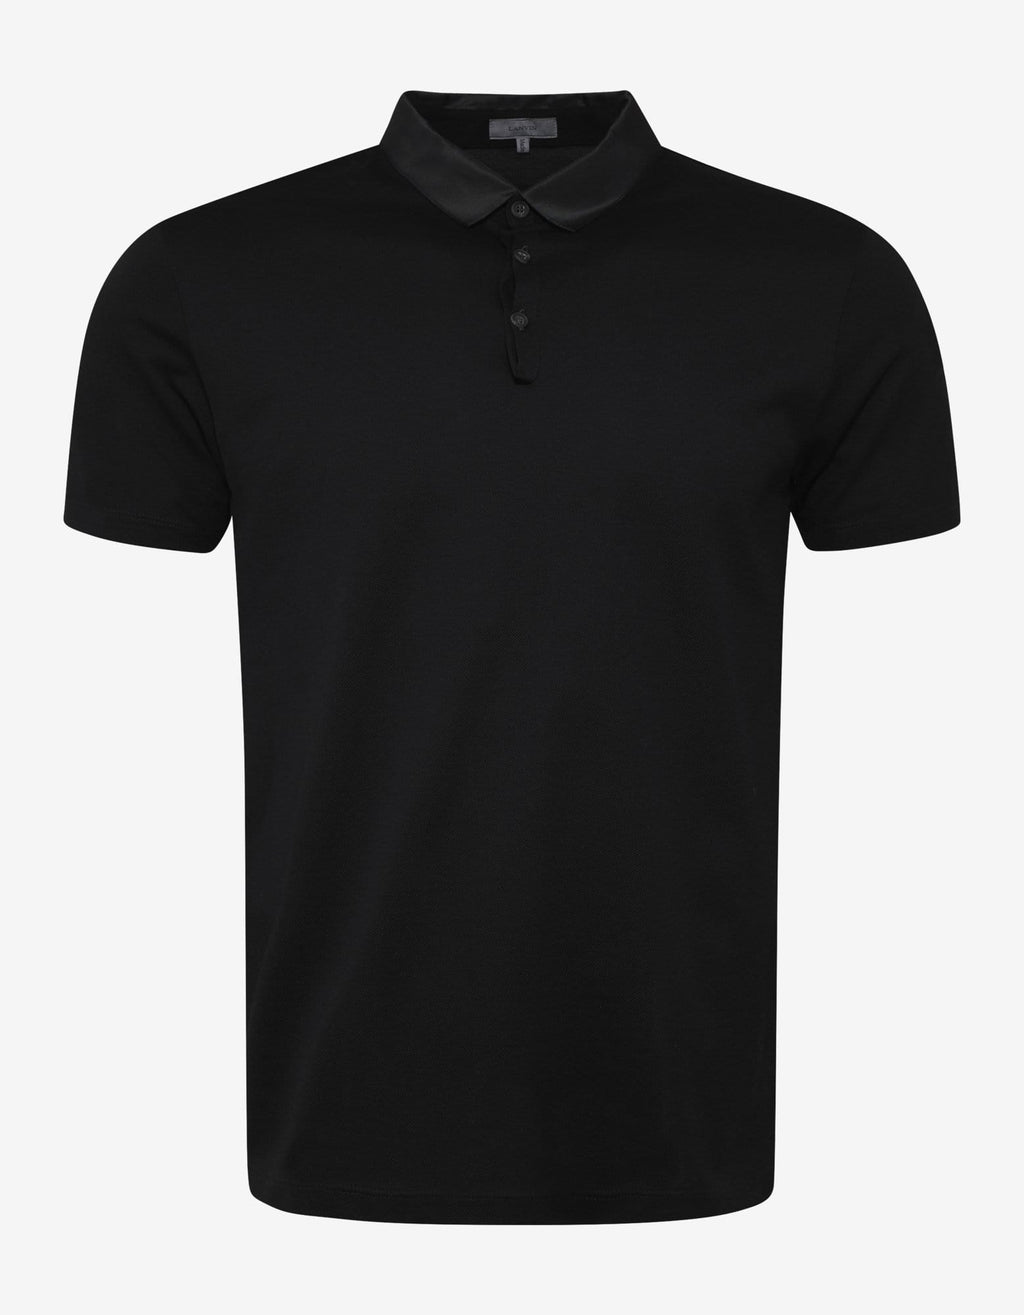 Lanvin Lanvin Black Polo T-Shirt with Grosgrain Collar